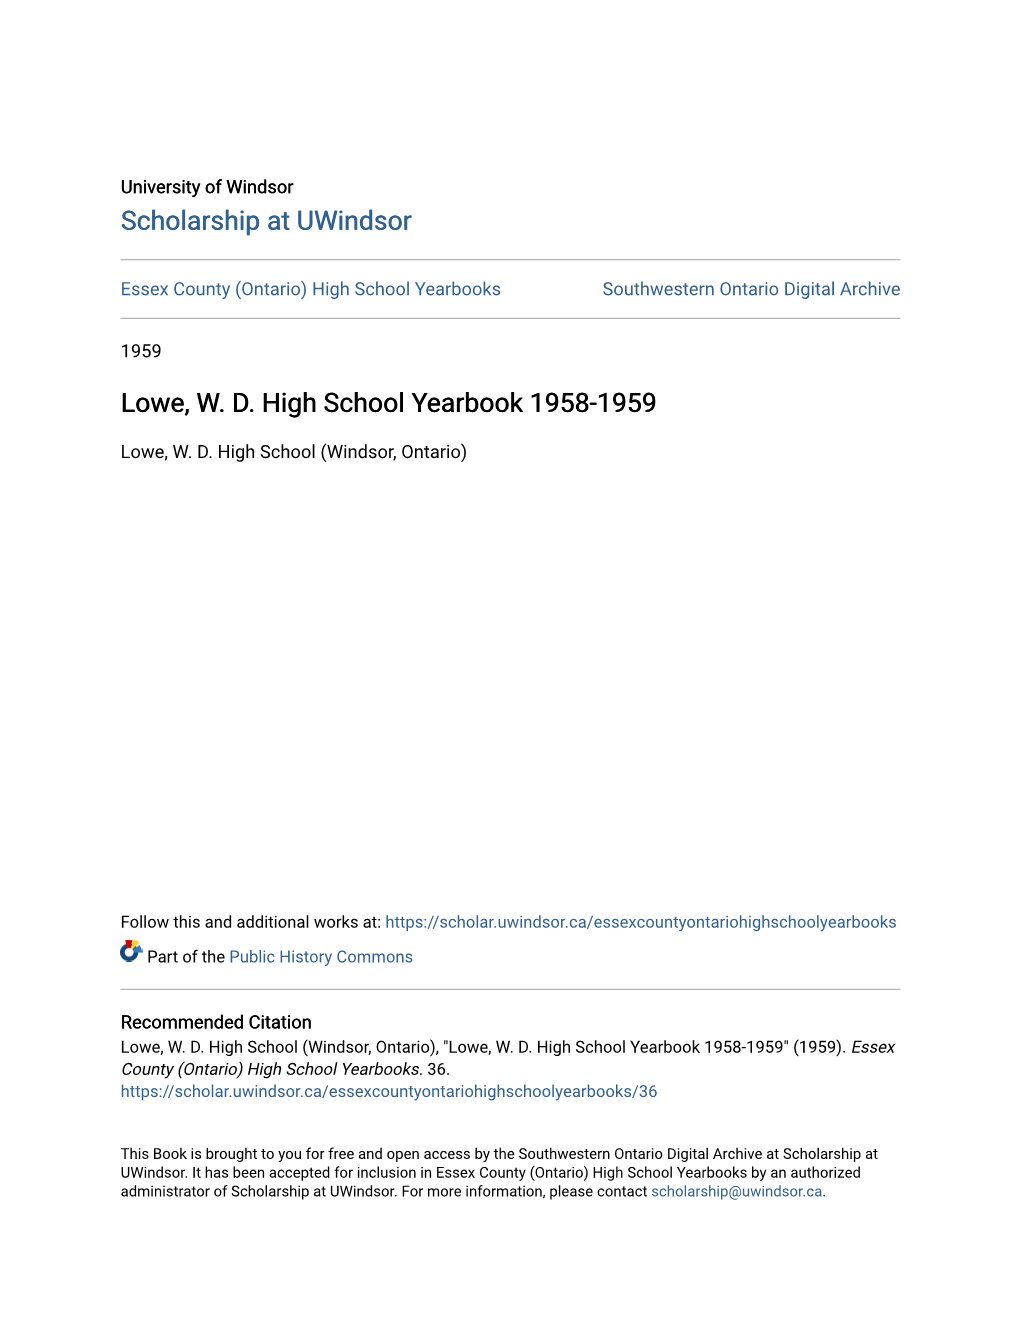 Lowe, W. D. High School Yearbook 1958-1959